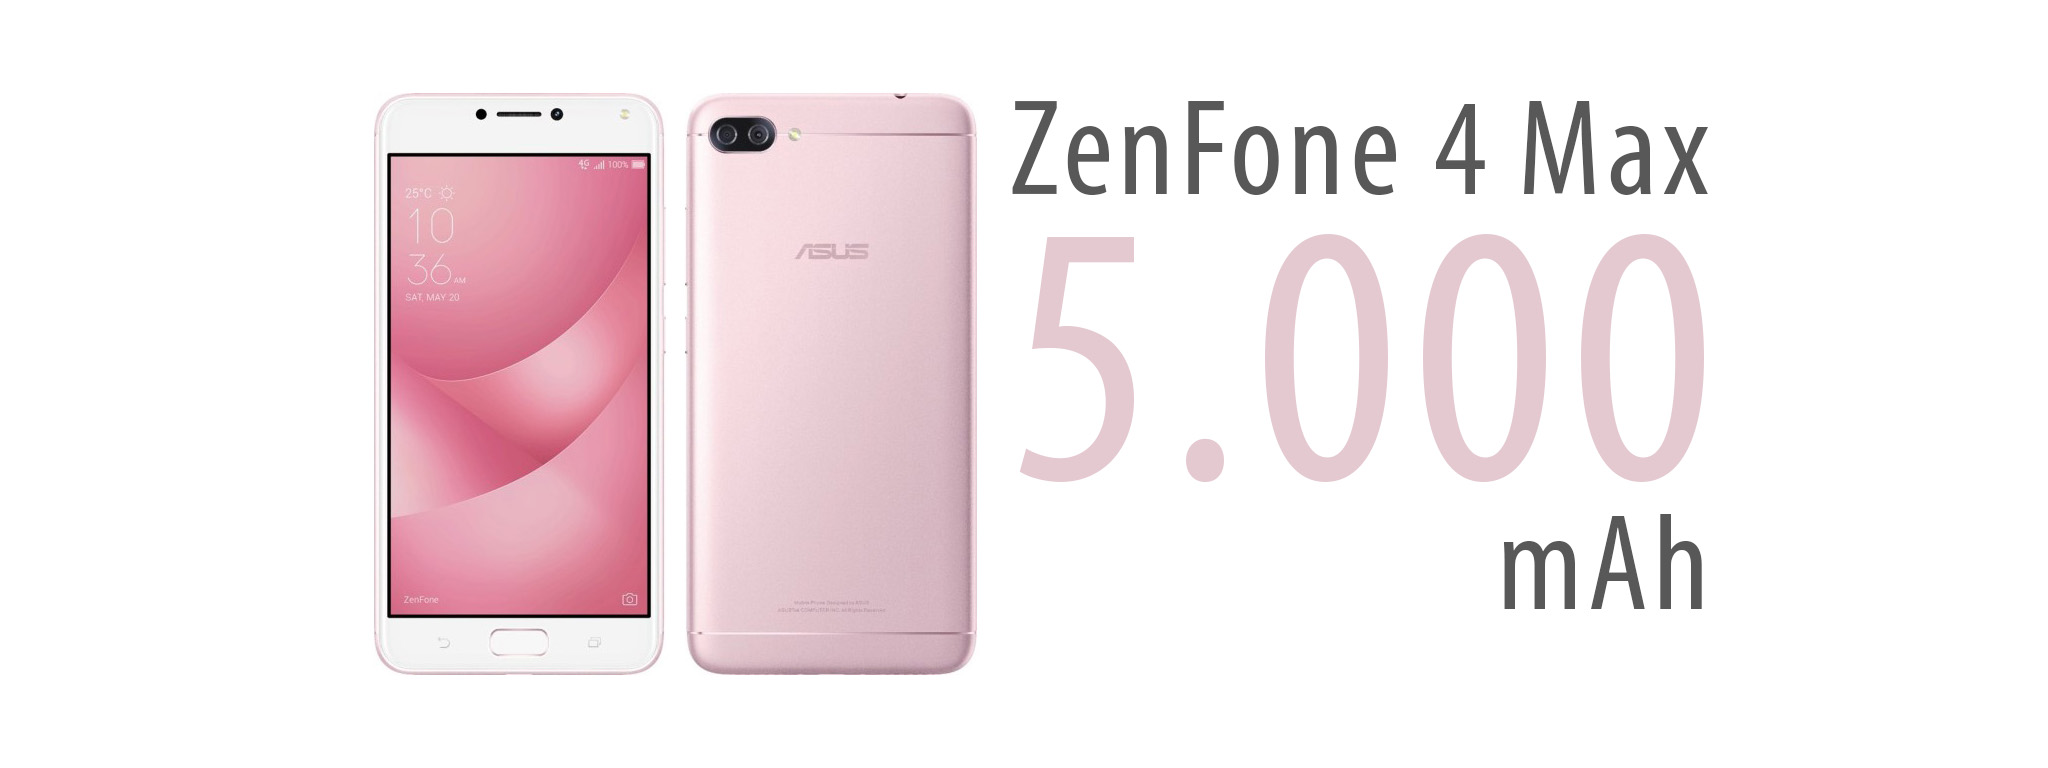 ASUS ZenFone 4 Max: pin 5.000 mAh, 1080p, xem phim 22 tiếng, camera kép, Android 7, giá từ 235 USD